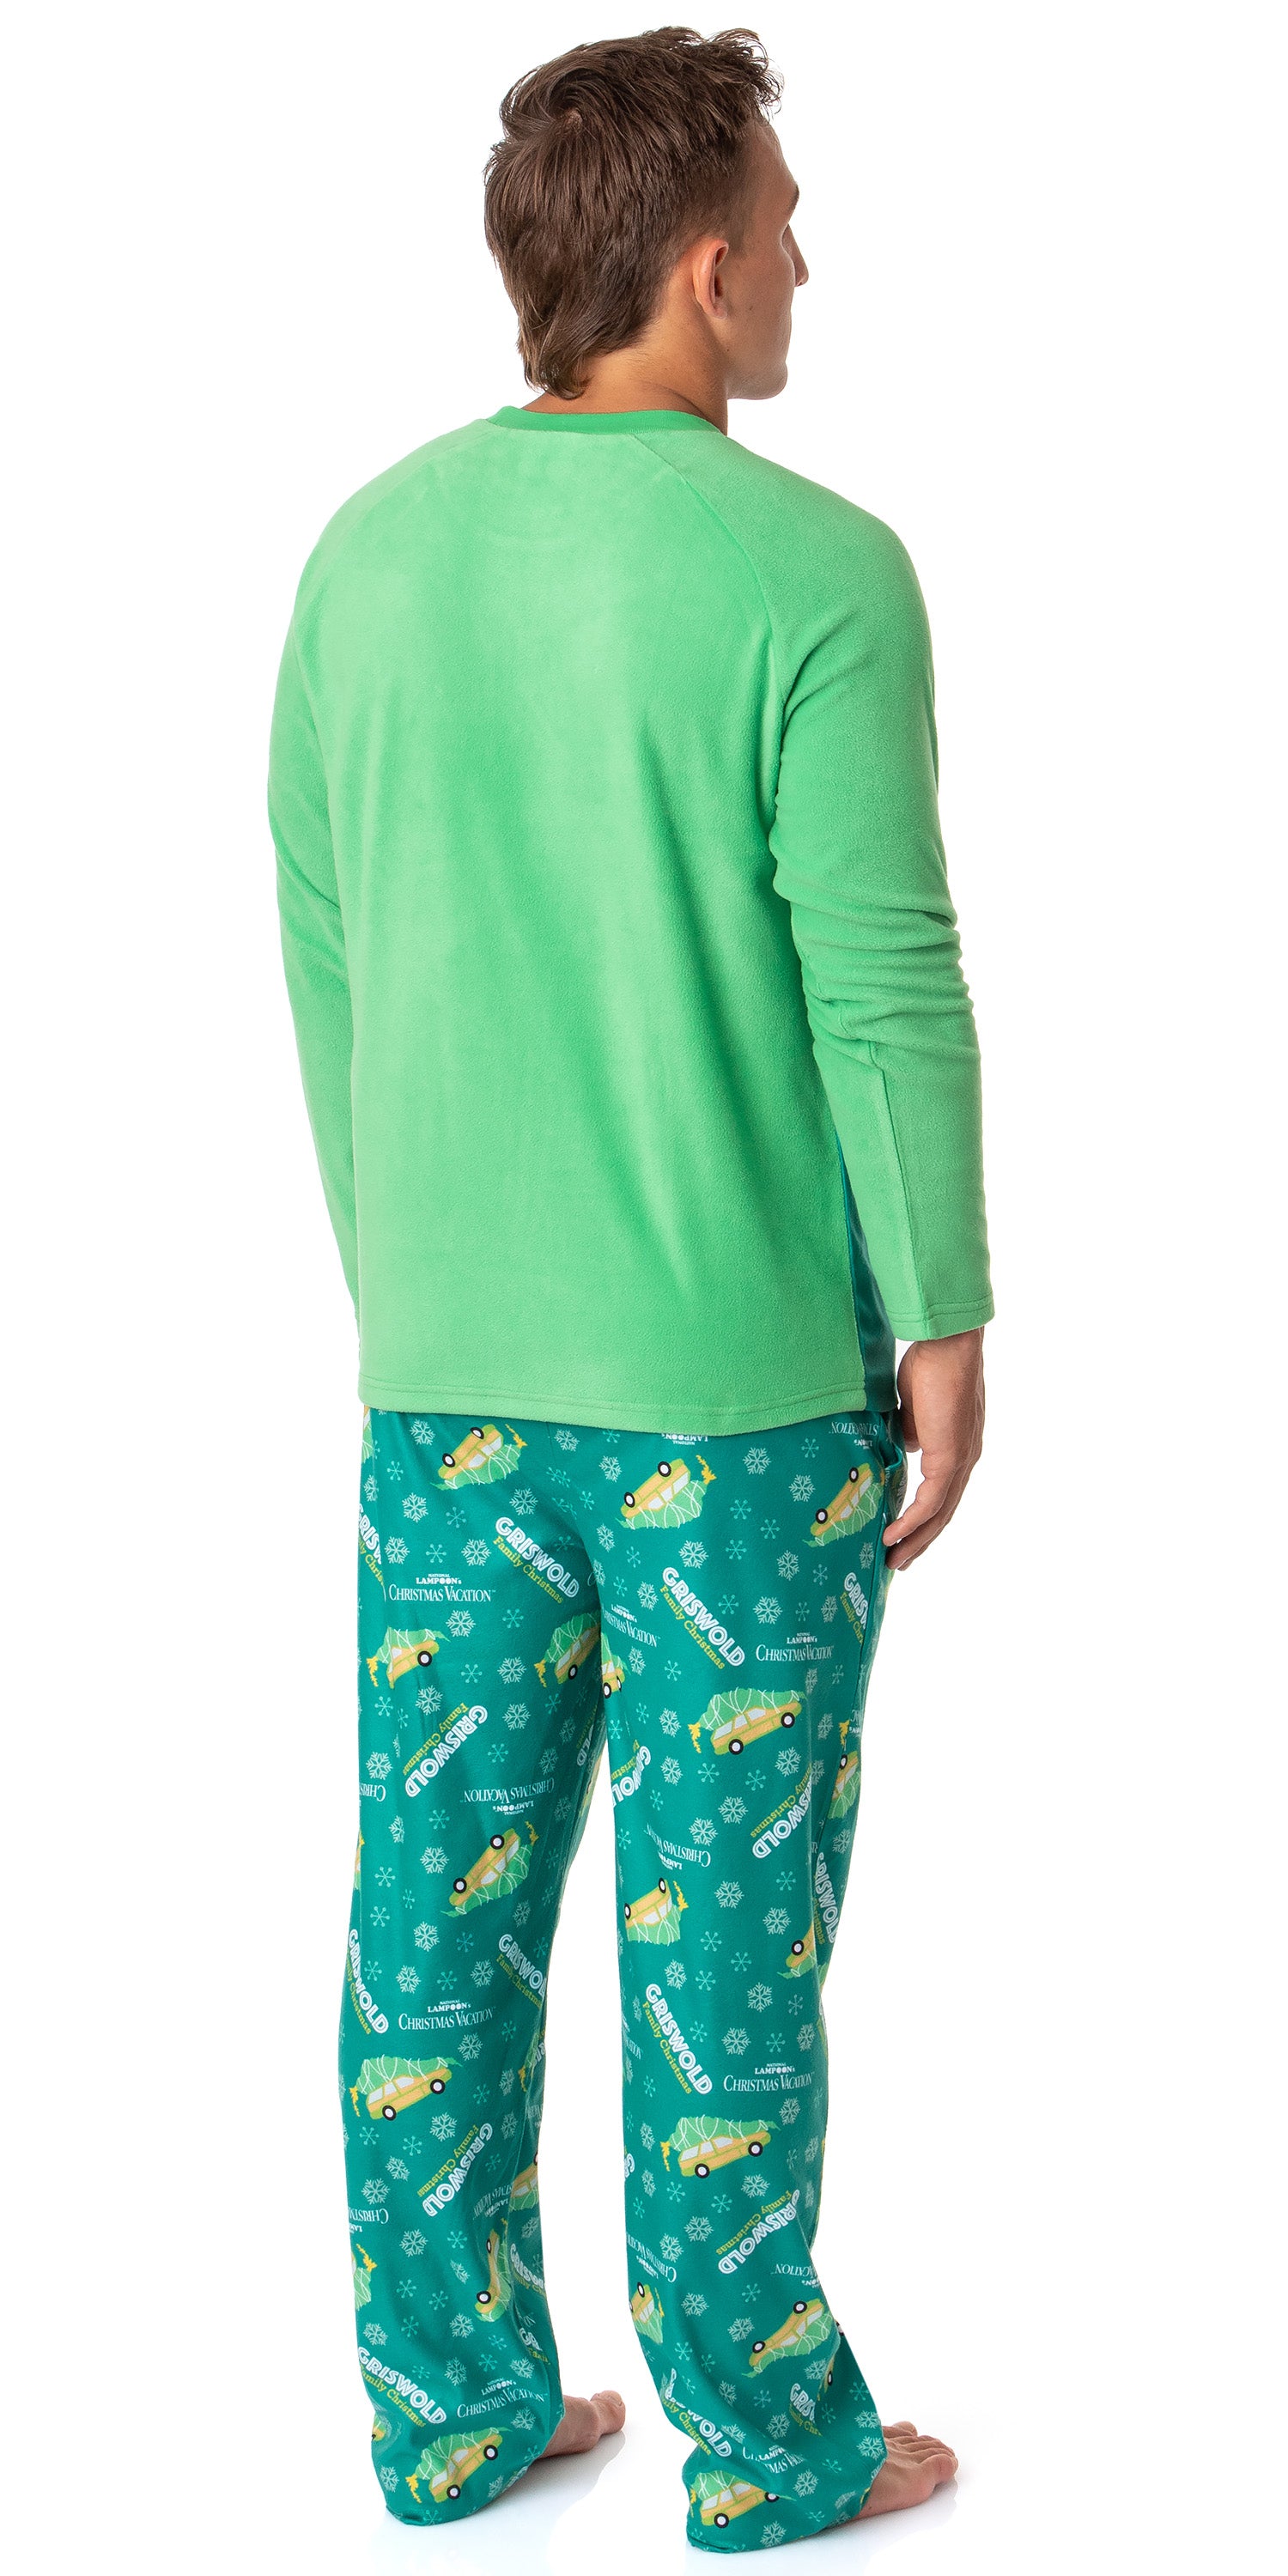 National Lampoon's Christmas Vacation Womens' Sleep Jogger Pajama